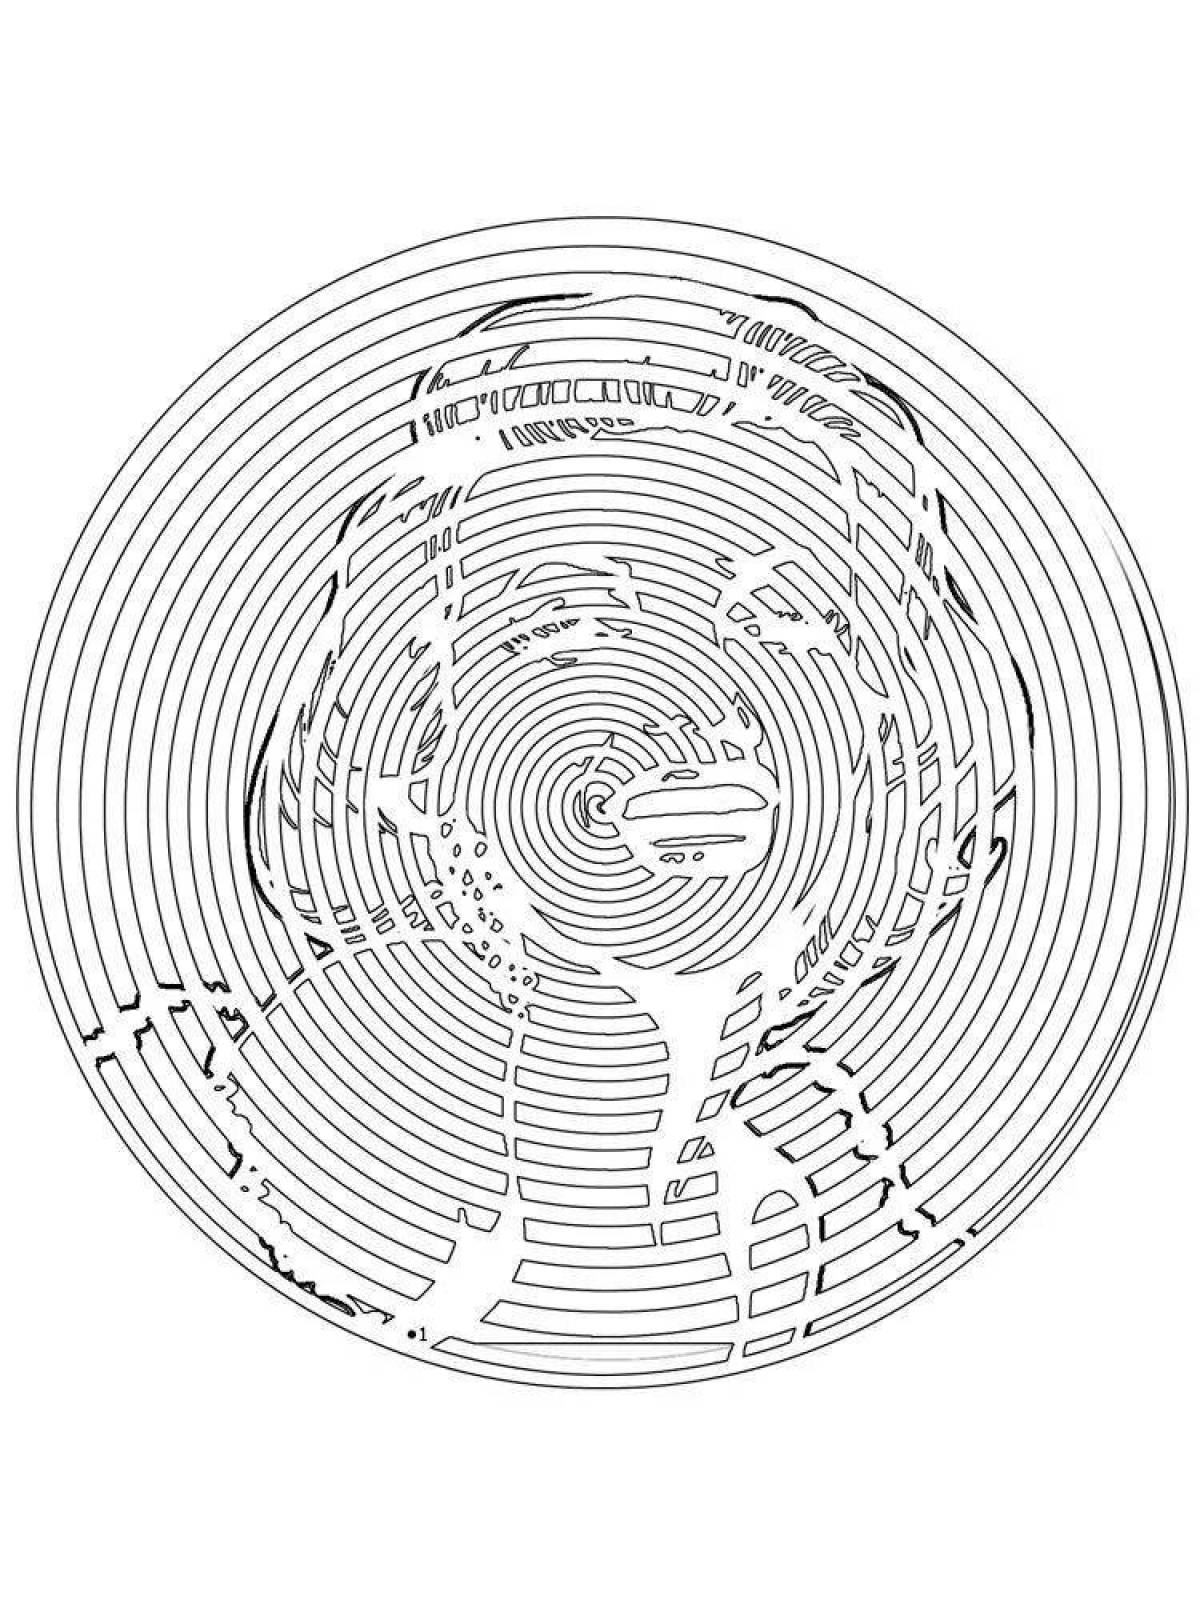 Detailed spiral of Dima Maslennikov